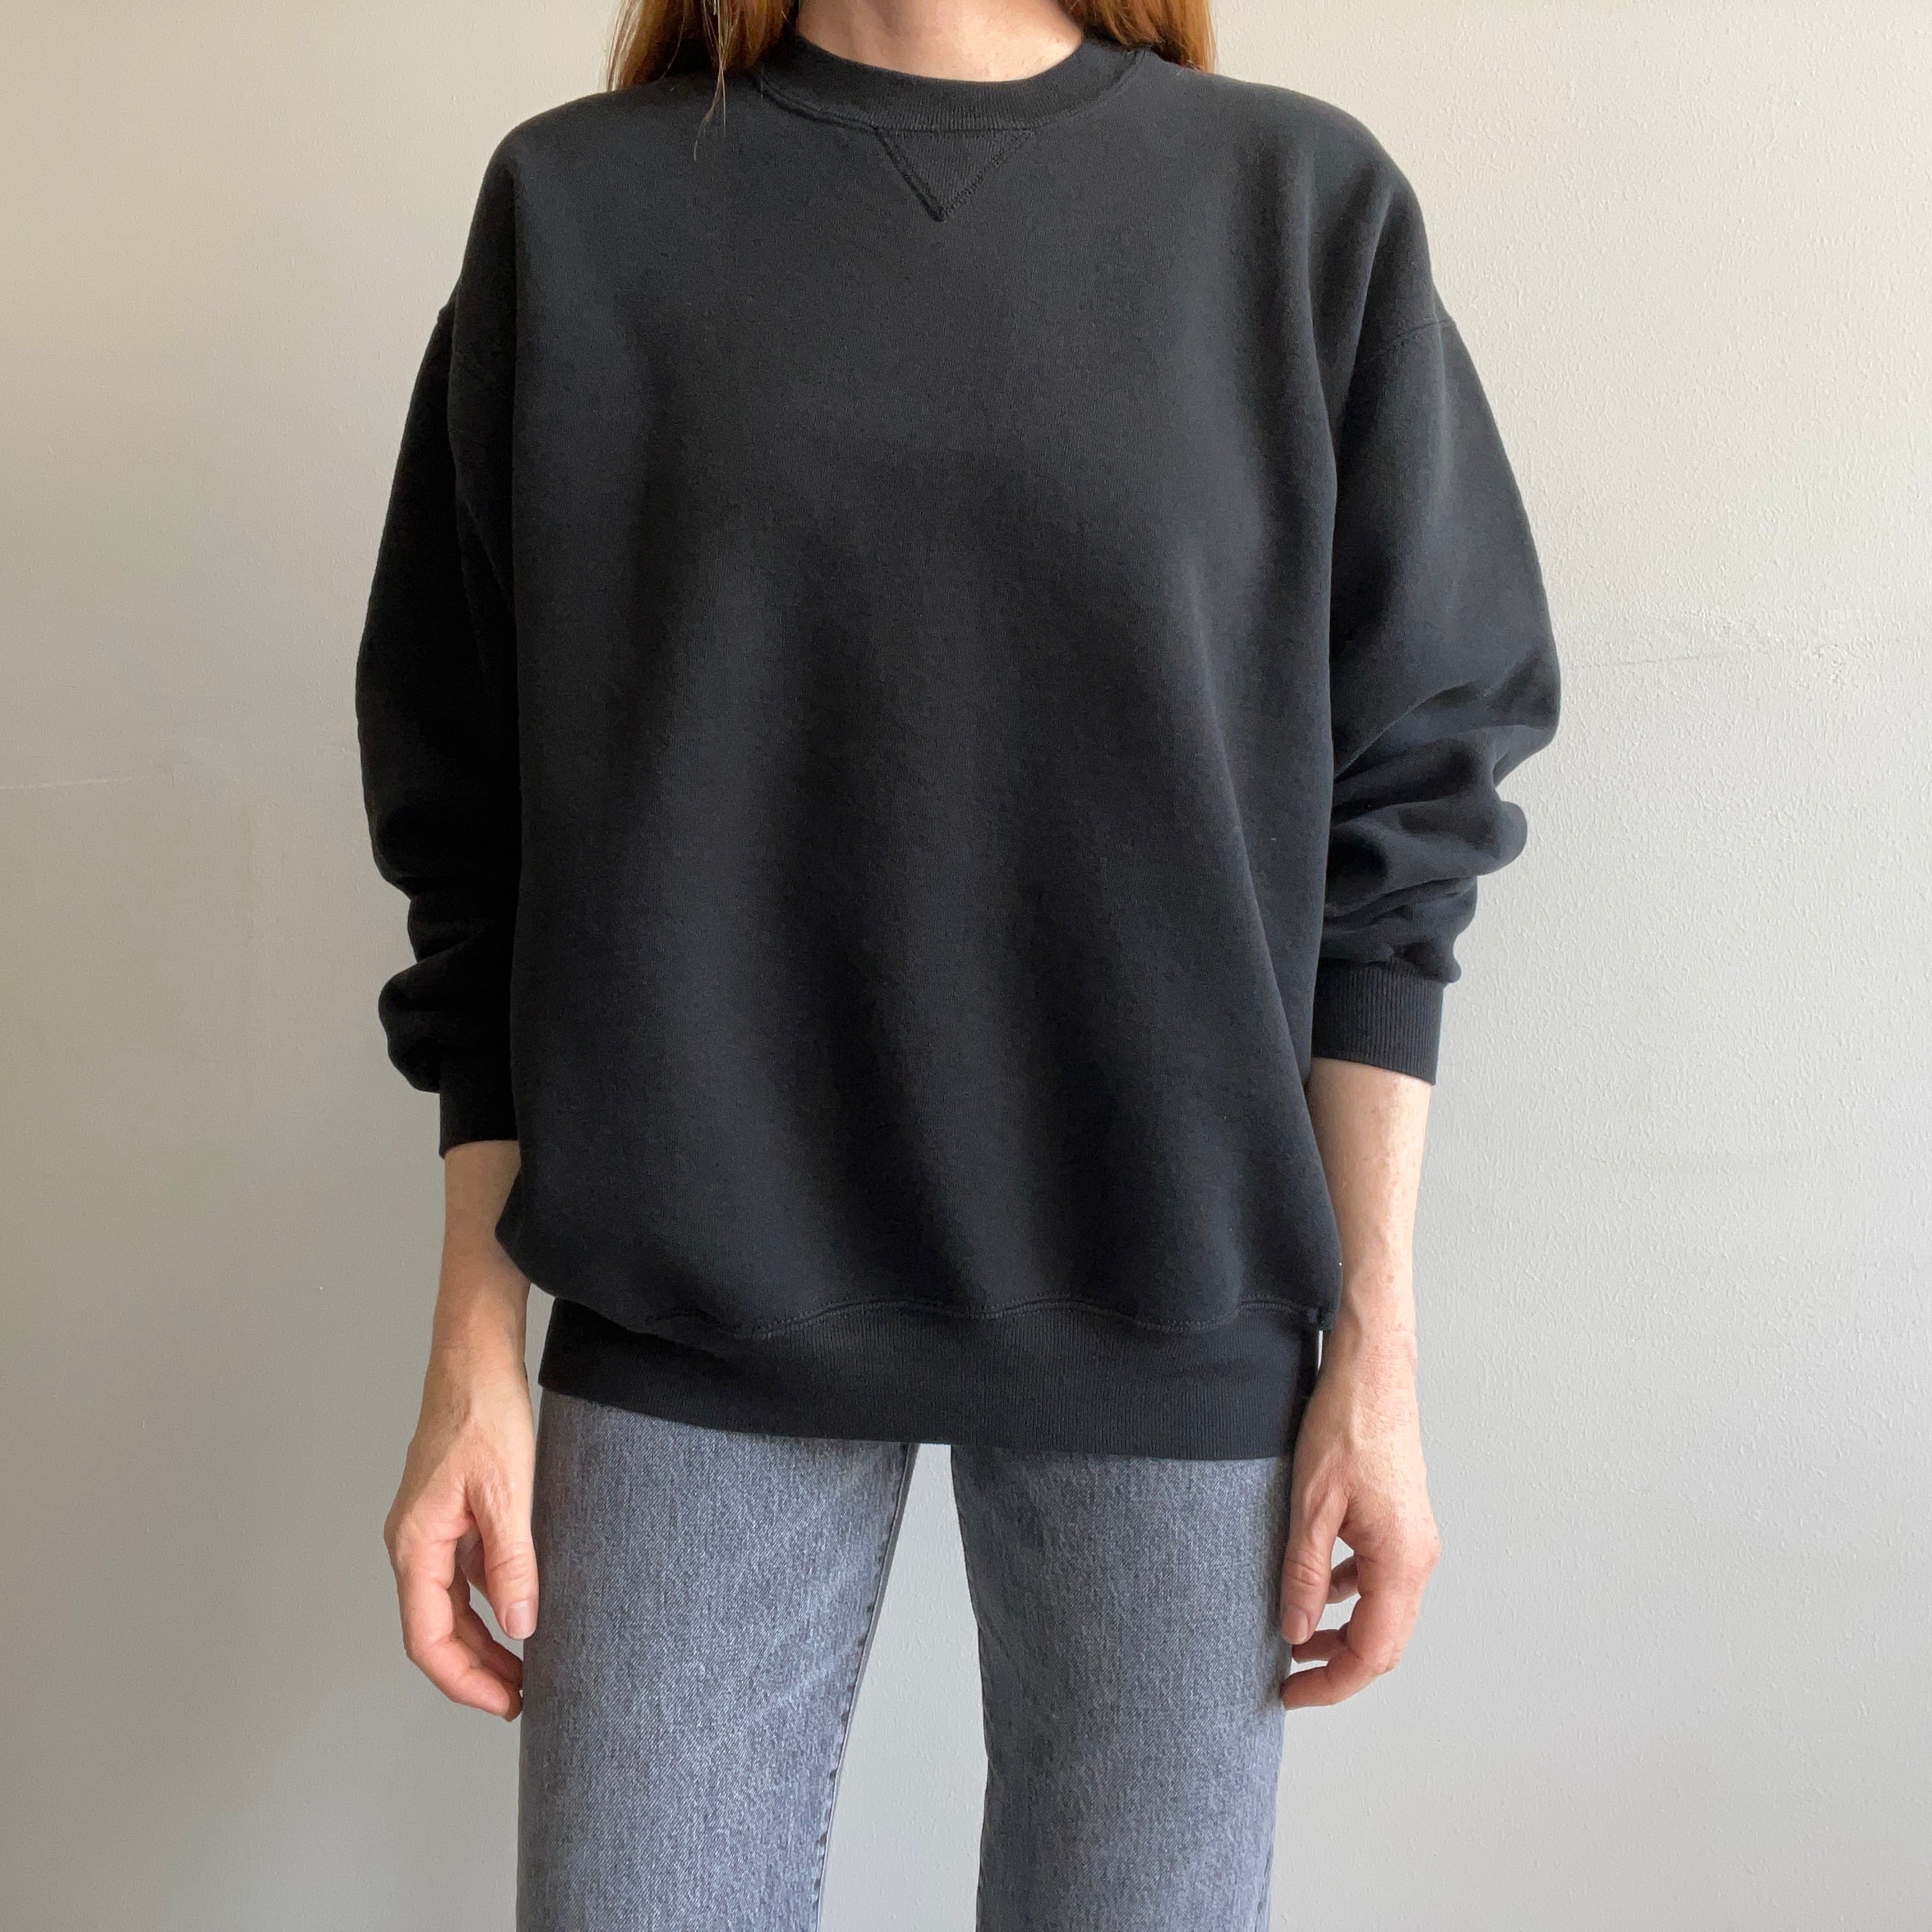 1990s Single V Blank Black Sweatshirt in Excellent Condition